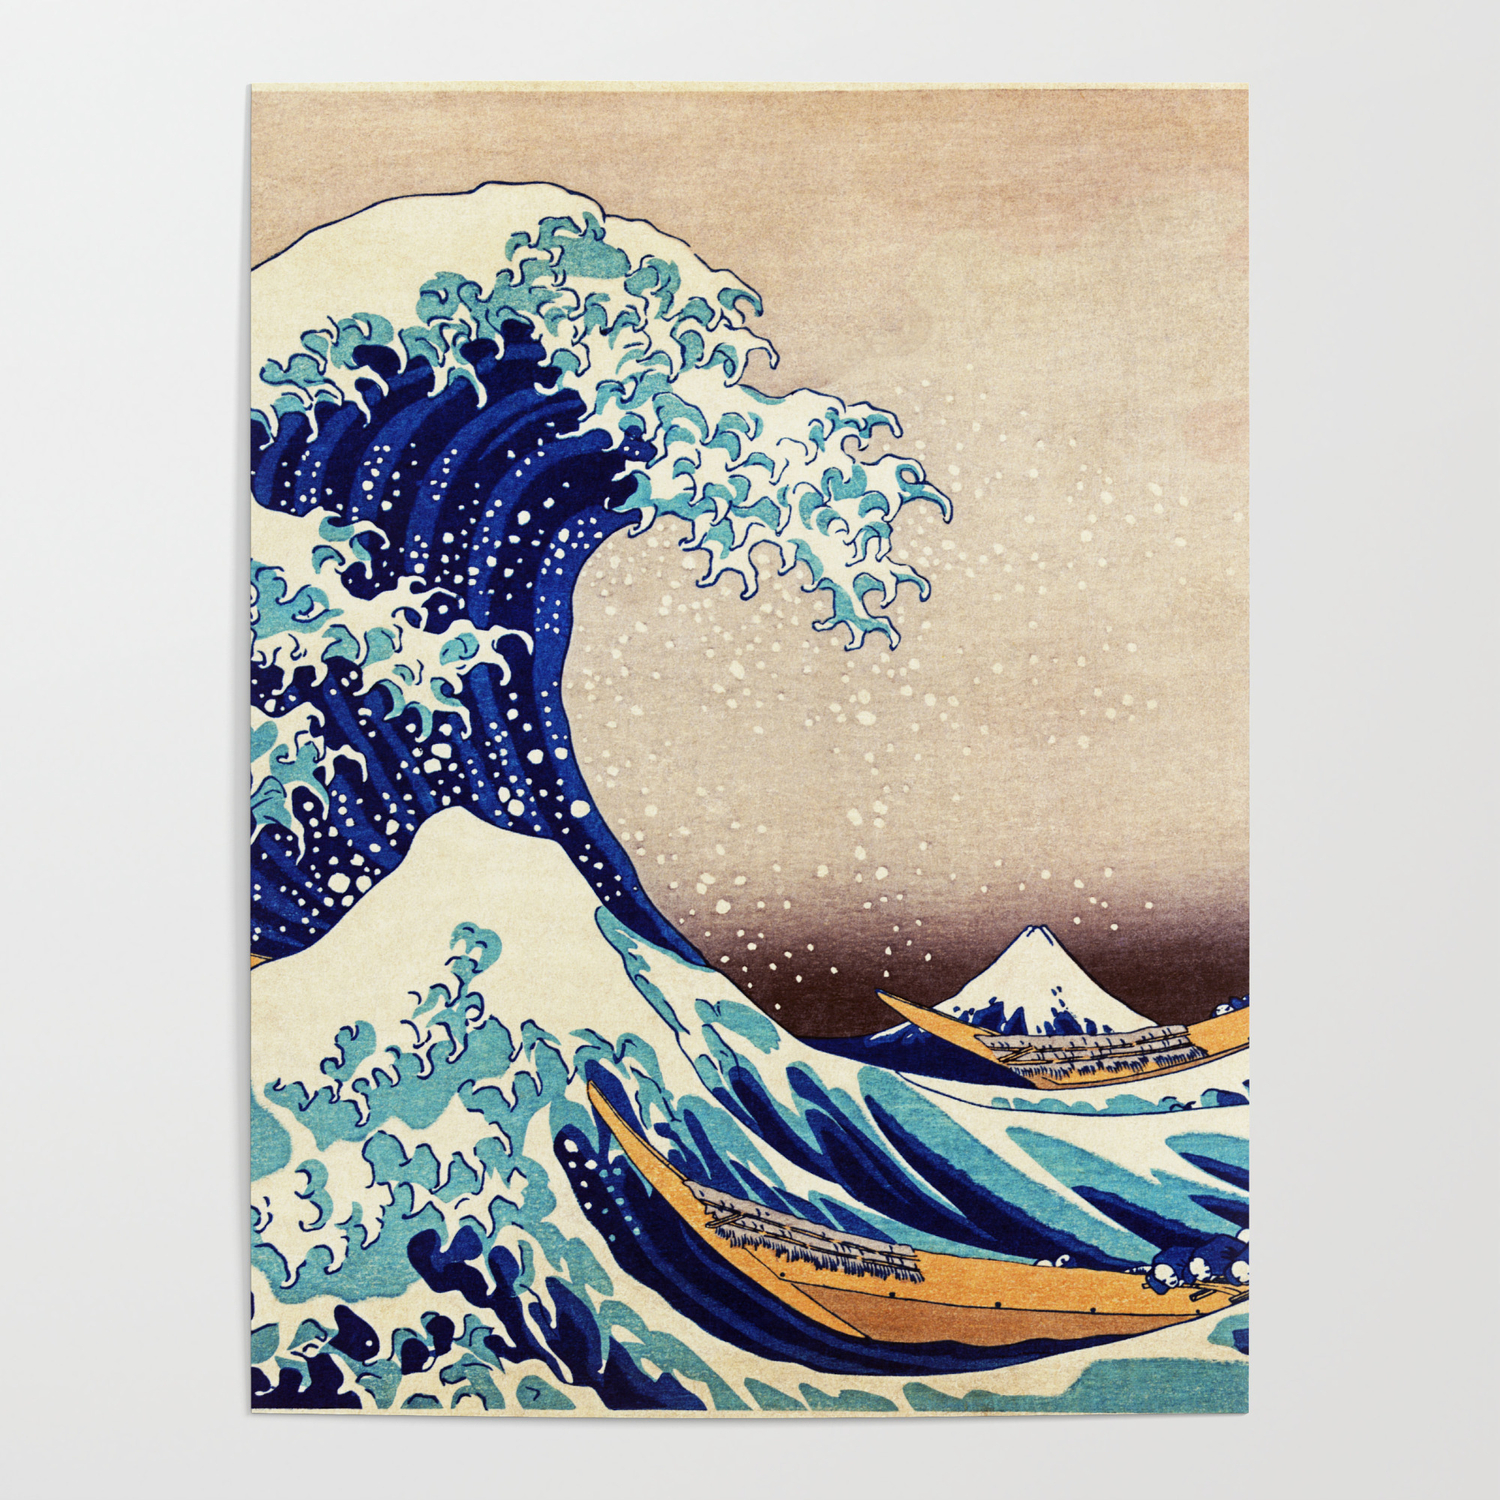 11x14 Unframed Art Print Great Gift for Art Love The Great Wave Off Kanagawa 